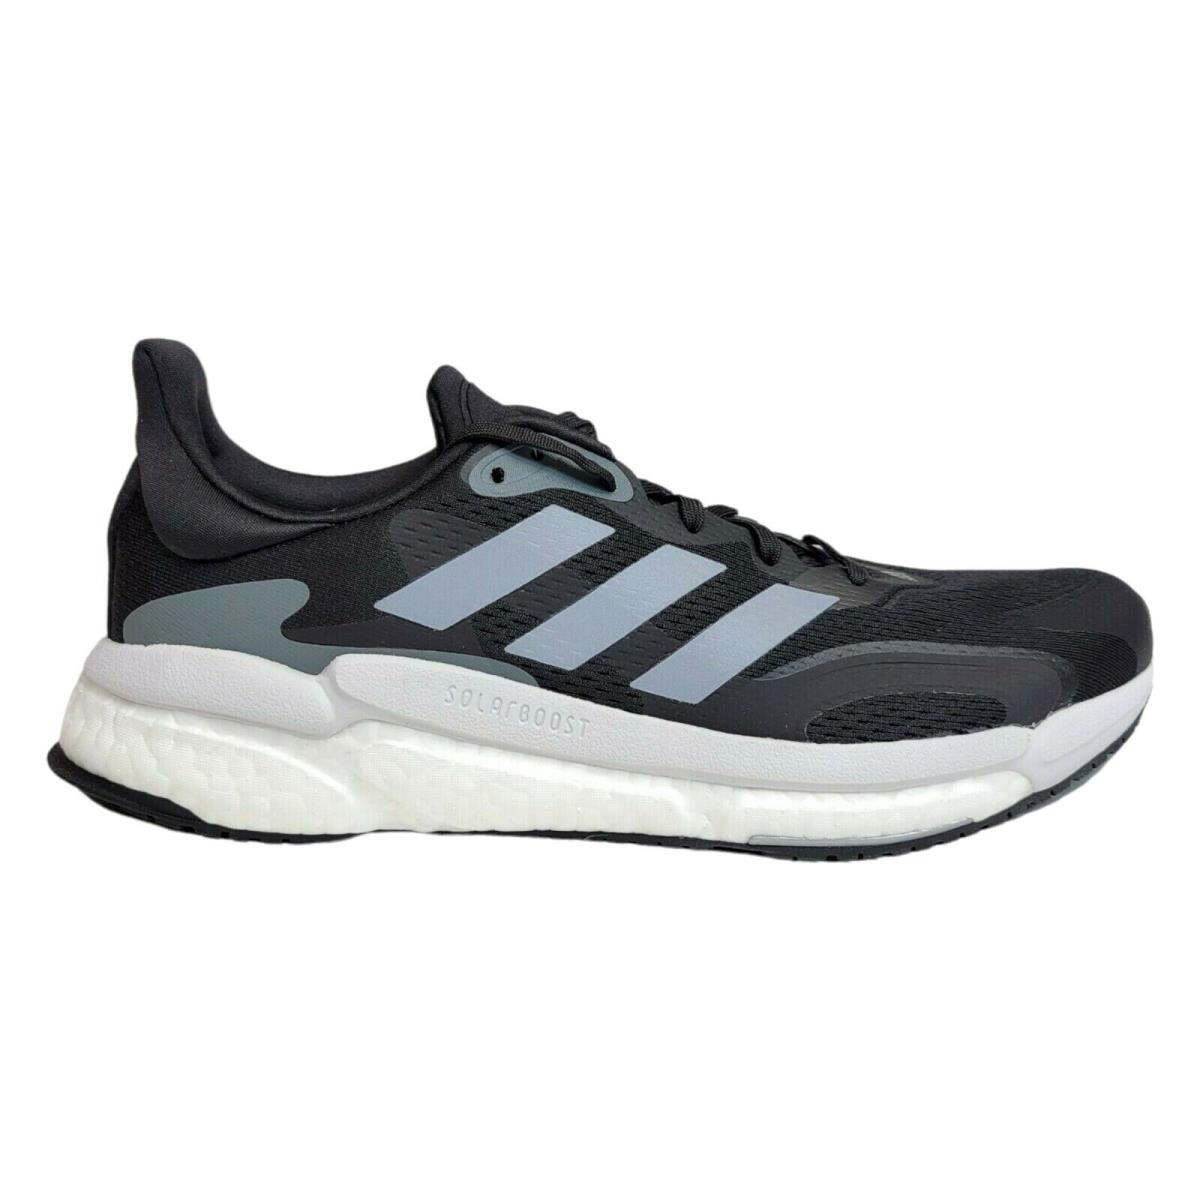 Adidas Mens 9.5 11 12.5 Solar Boost 3 Running Shoes Sneakers Black FW9137 - Black